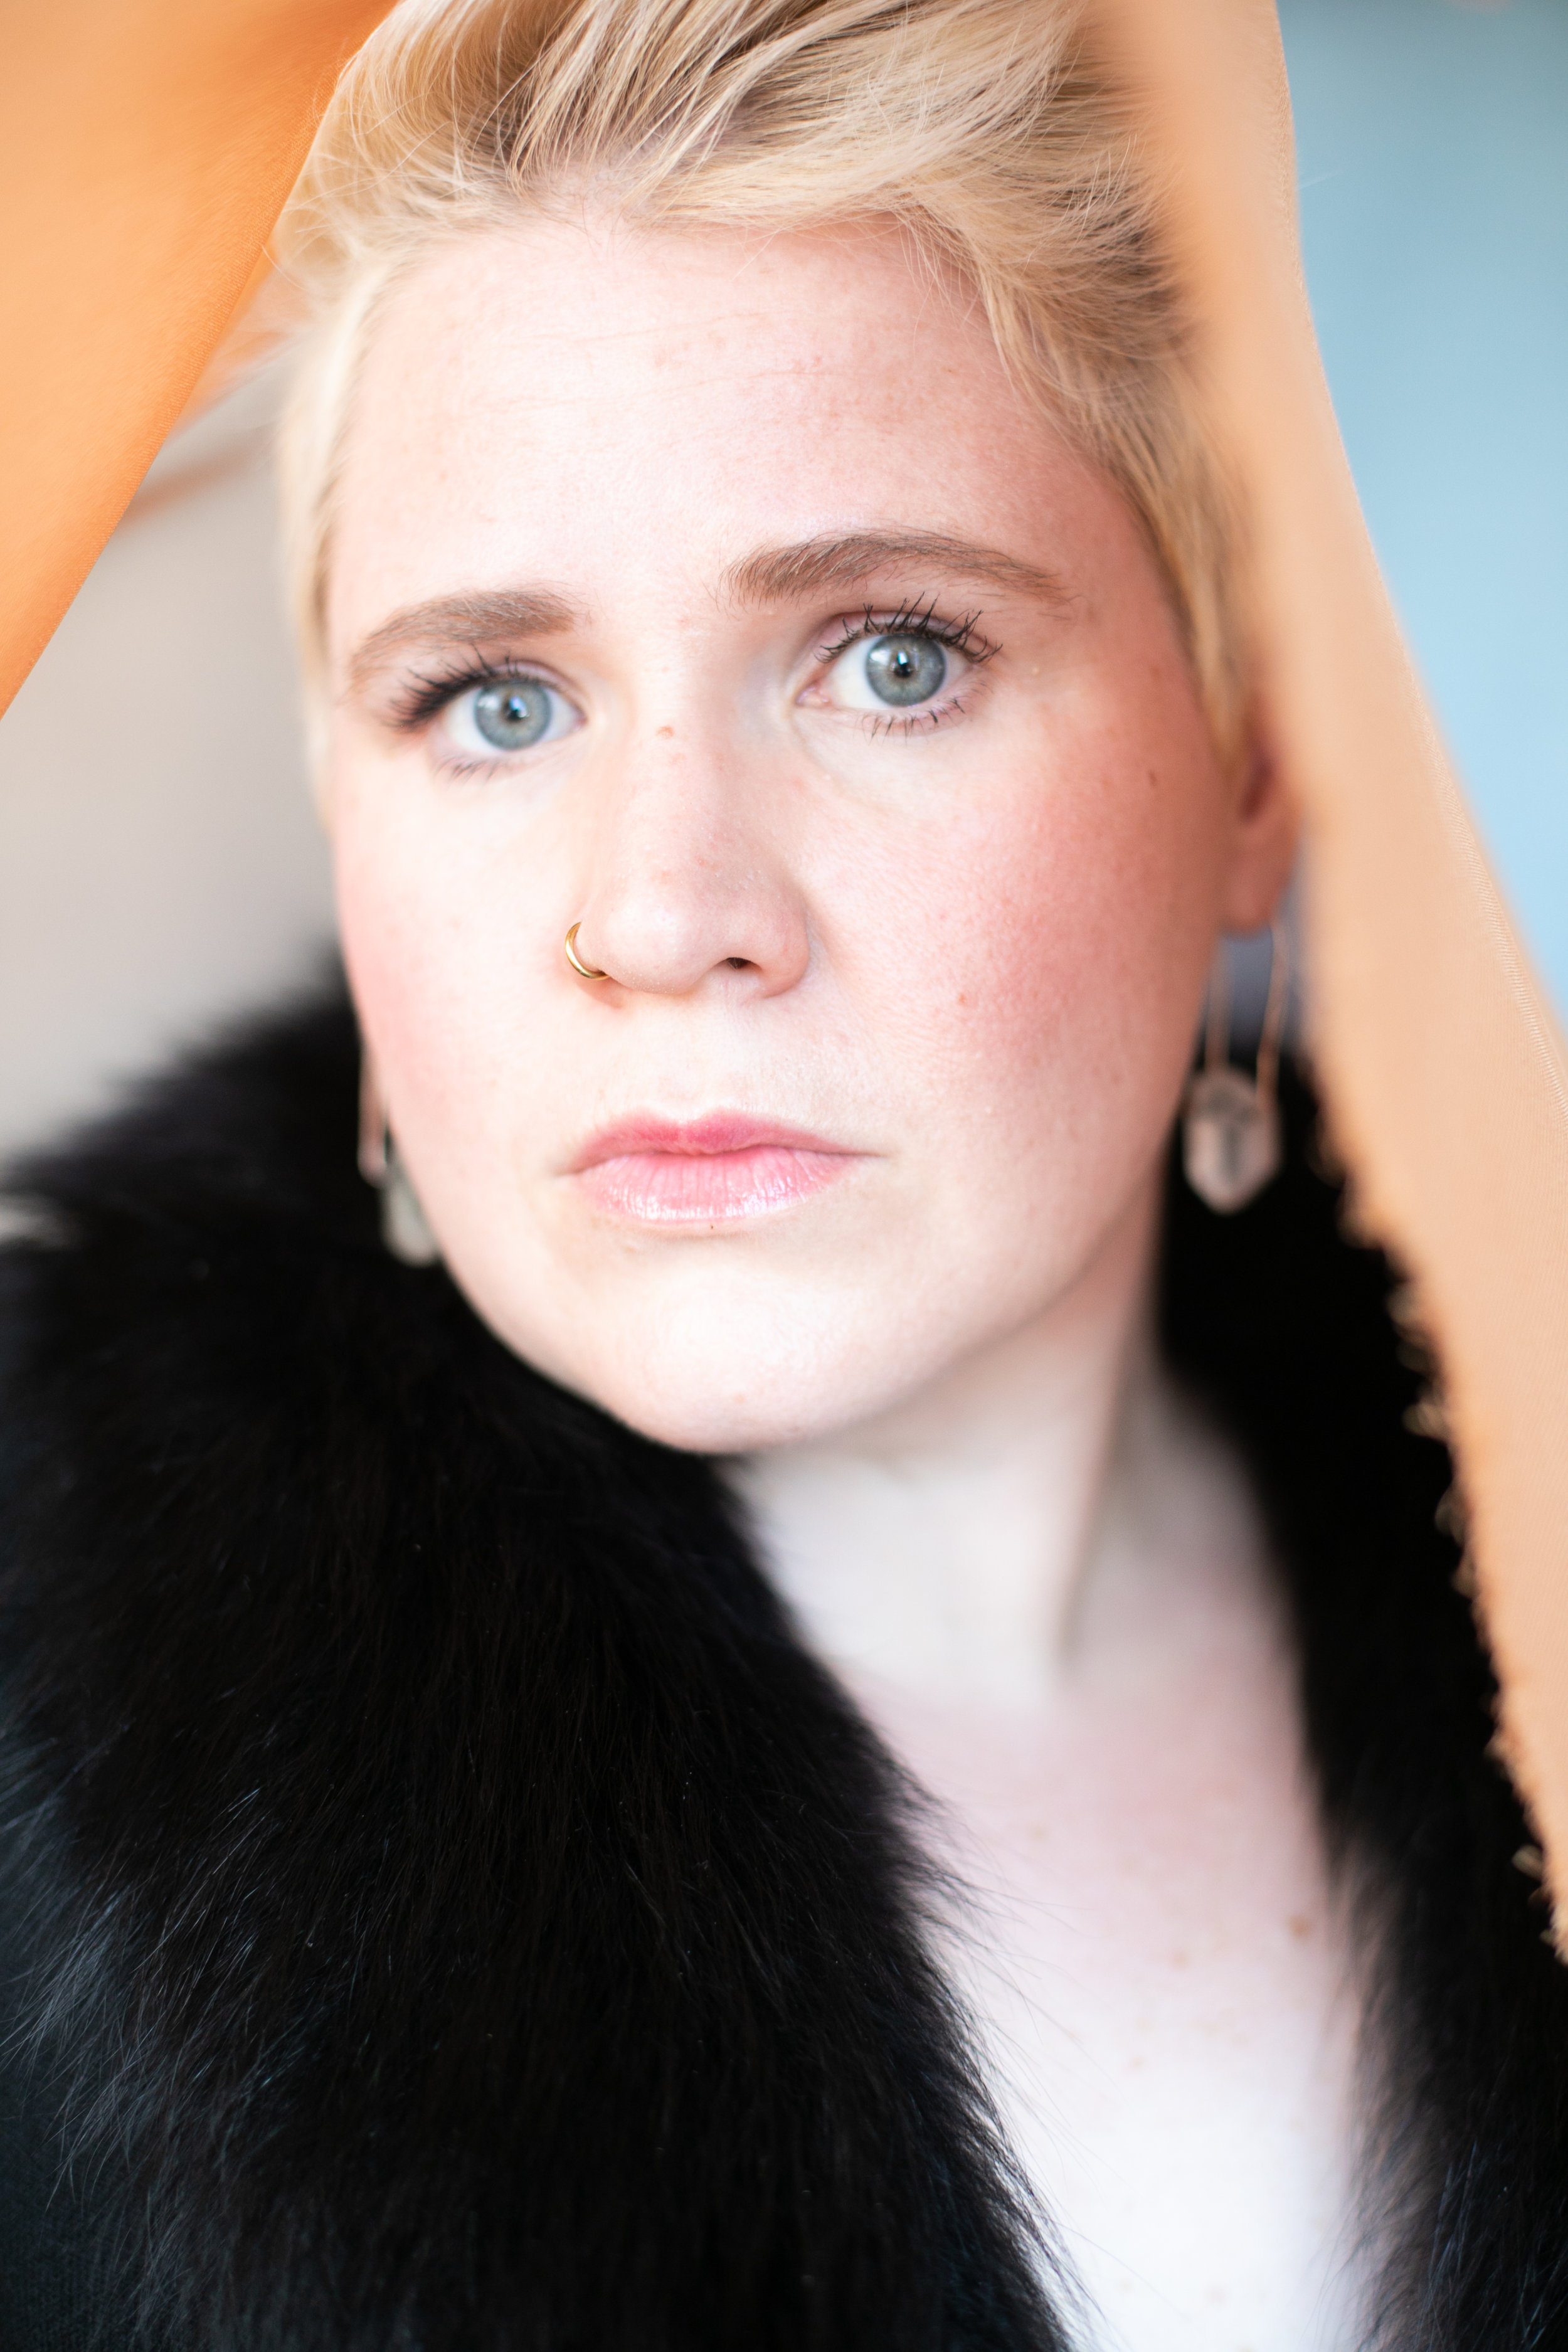  Errin Julkunen Pedersen photographed by Ashley Thalman at Ultraviolet Studios. Empowered, honest, beautiful.   